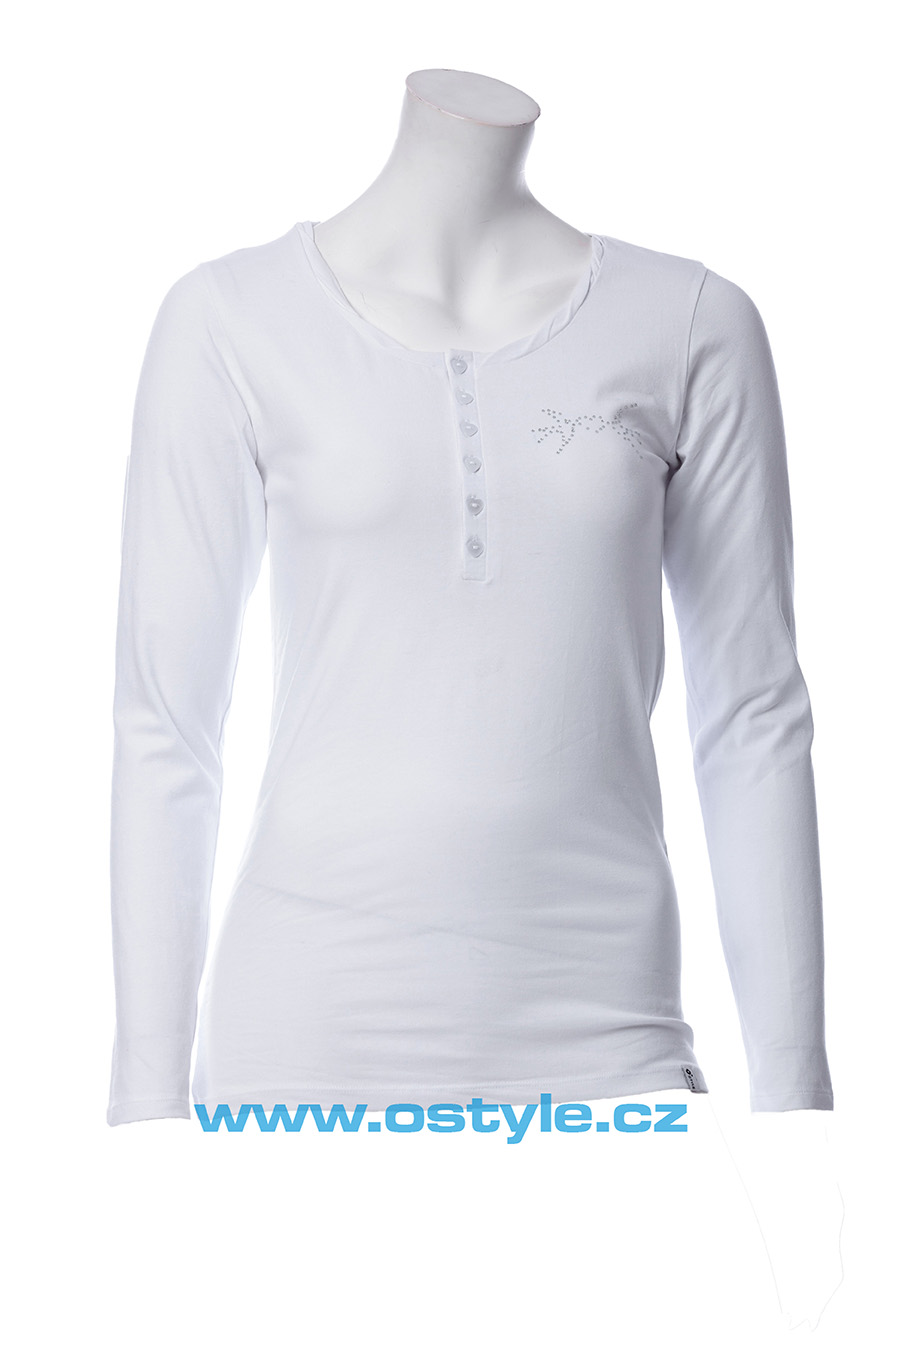 Dámské tričko O´Style 6313 white